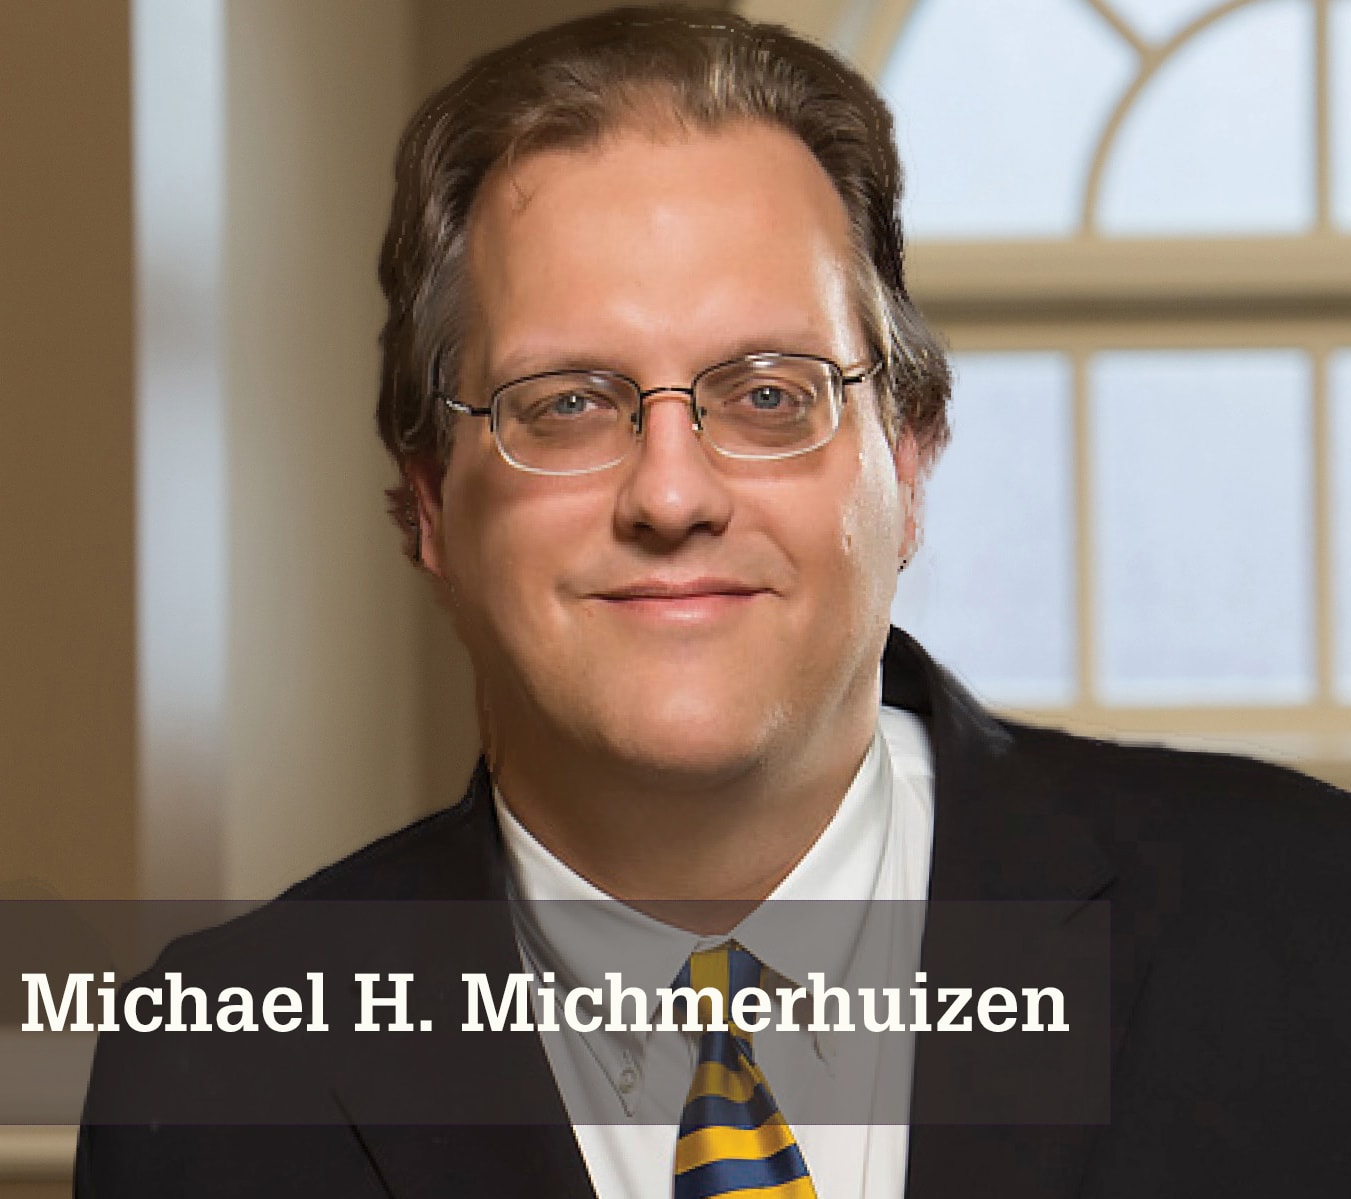 Michael H. Michmerhuizen